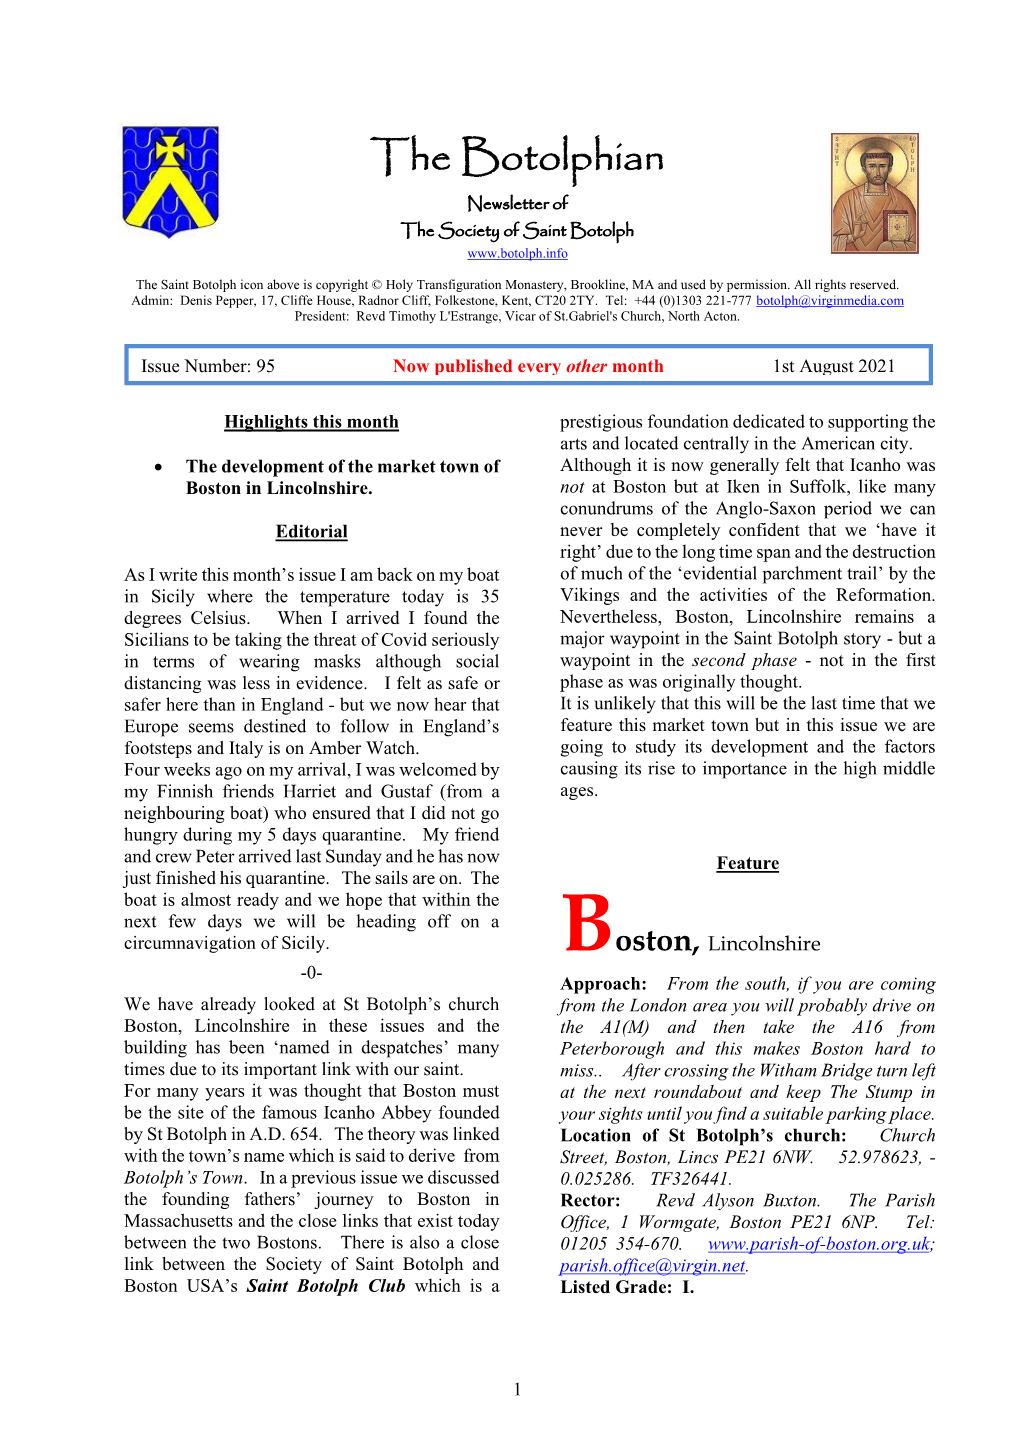 Newsletter of the Society of Saint Botolph